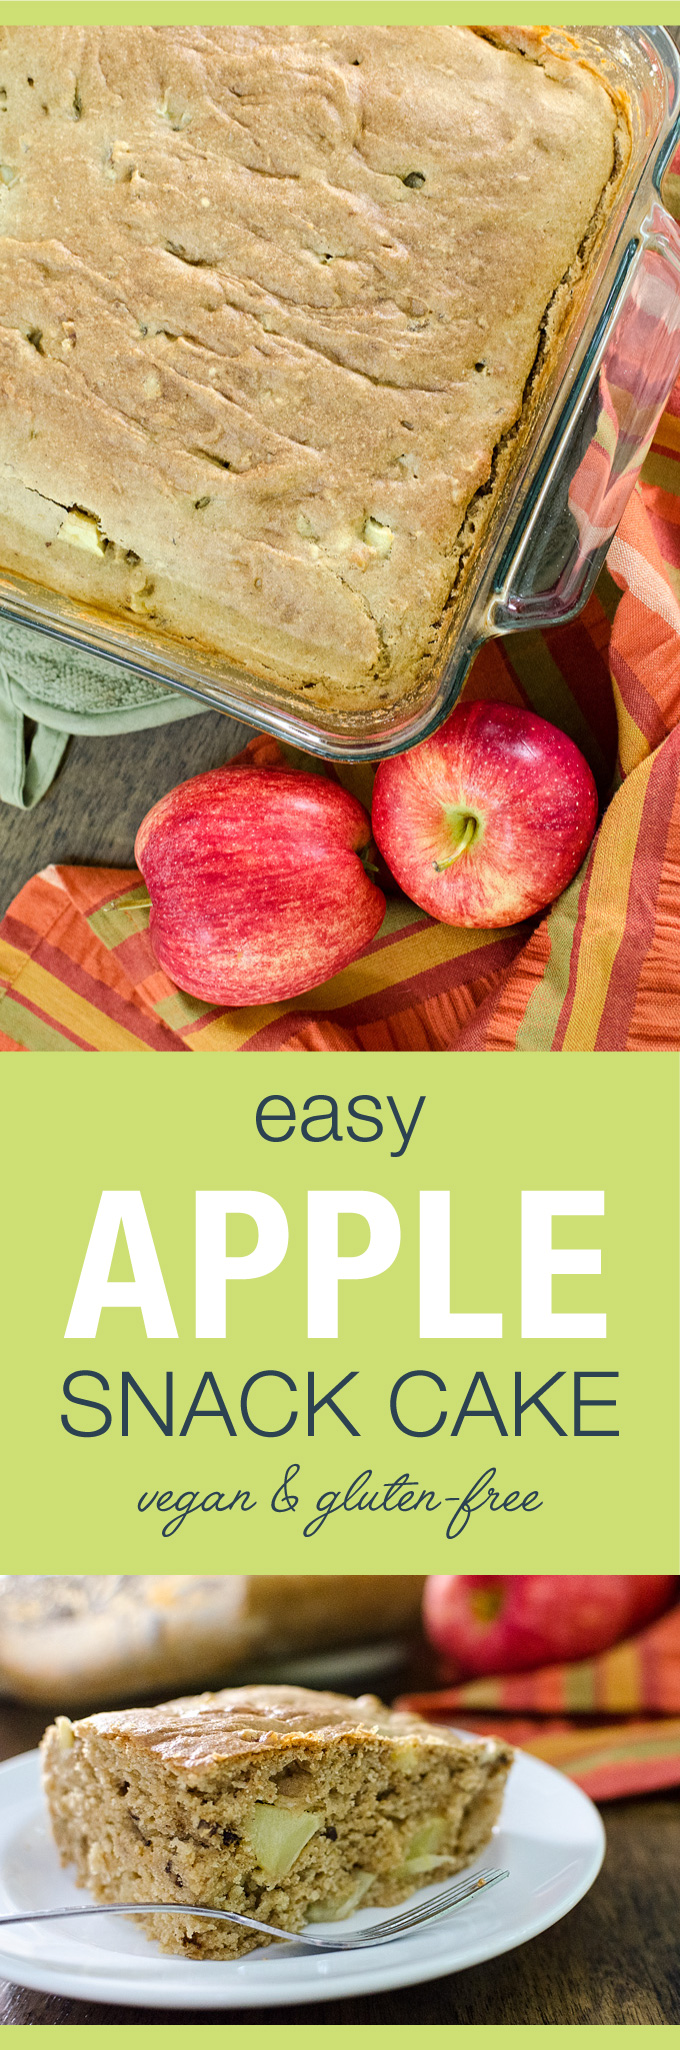 Easy Gluten-Free Apple Snack Cake - mix and bake this simple vegan recipe in the same pan! | VeggiePrimer.com